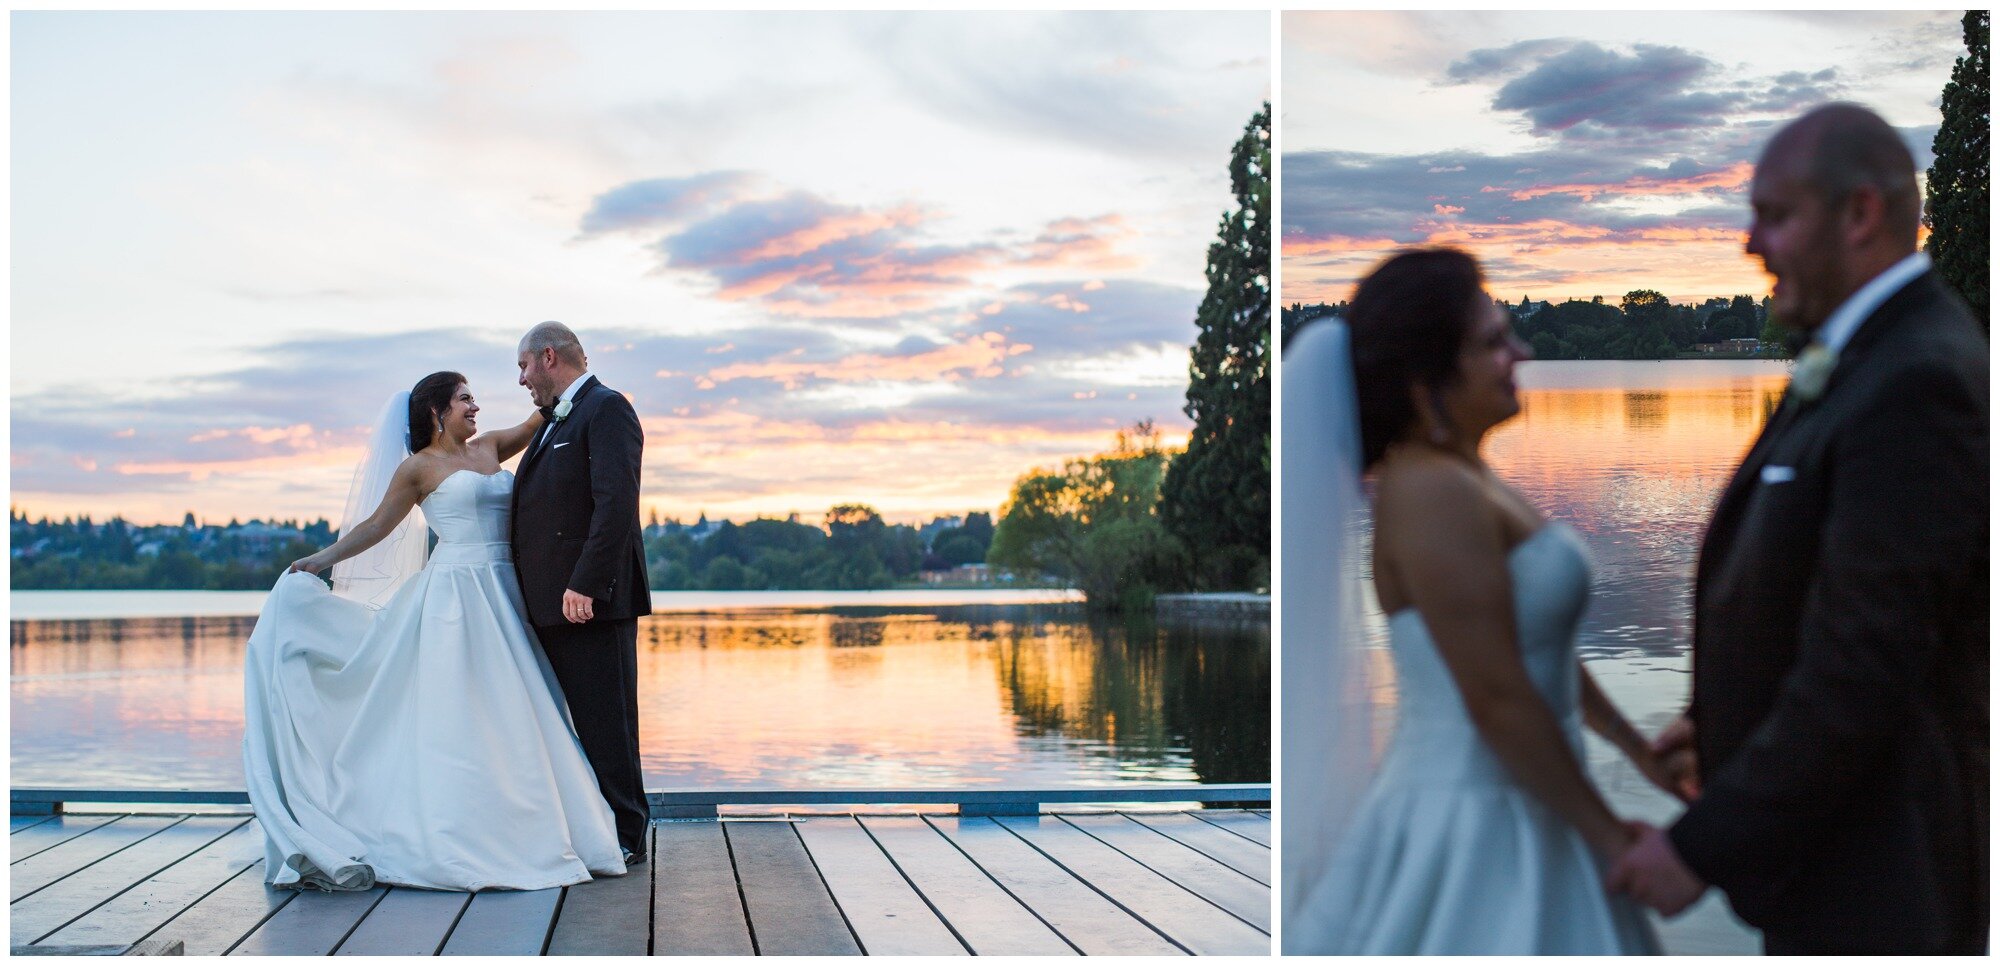 green lake wedding photography at sunset alexandra knight photography.jpg